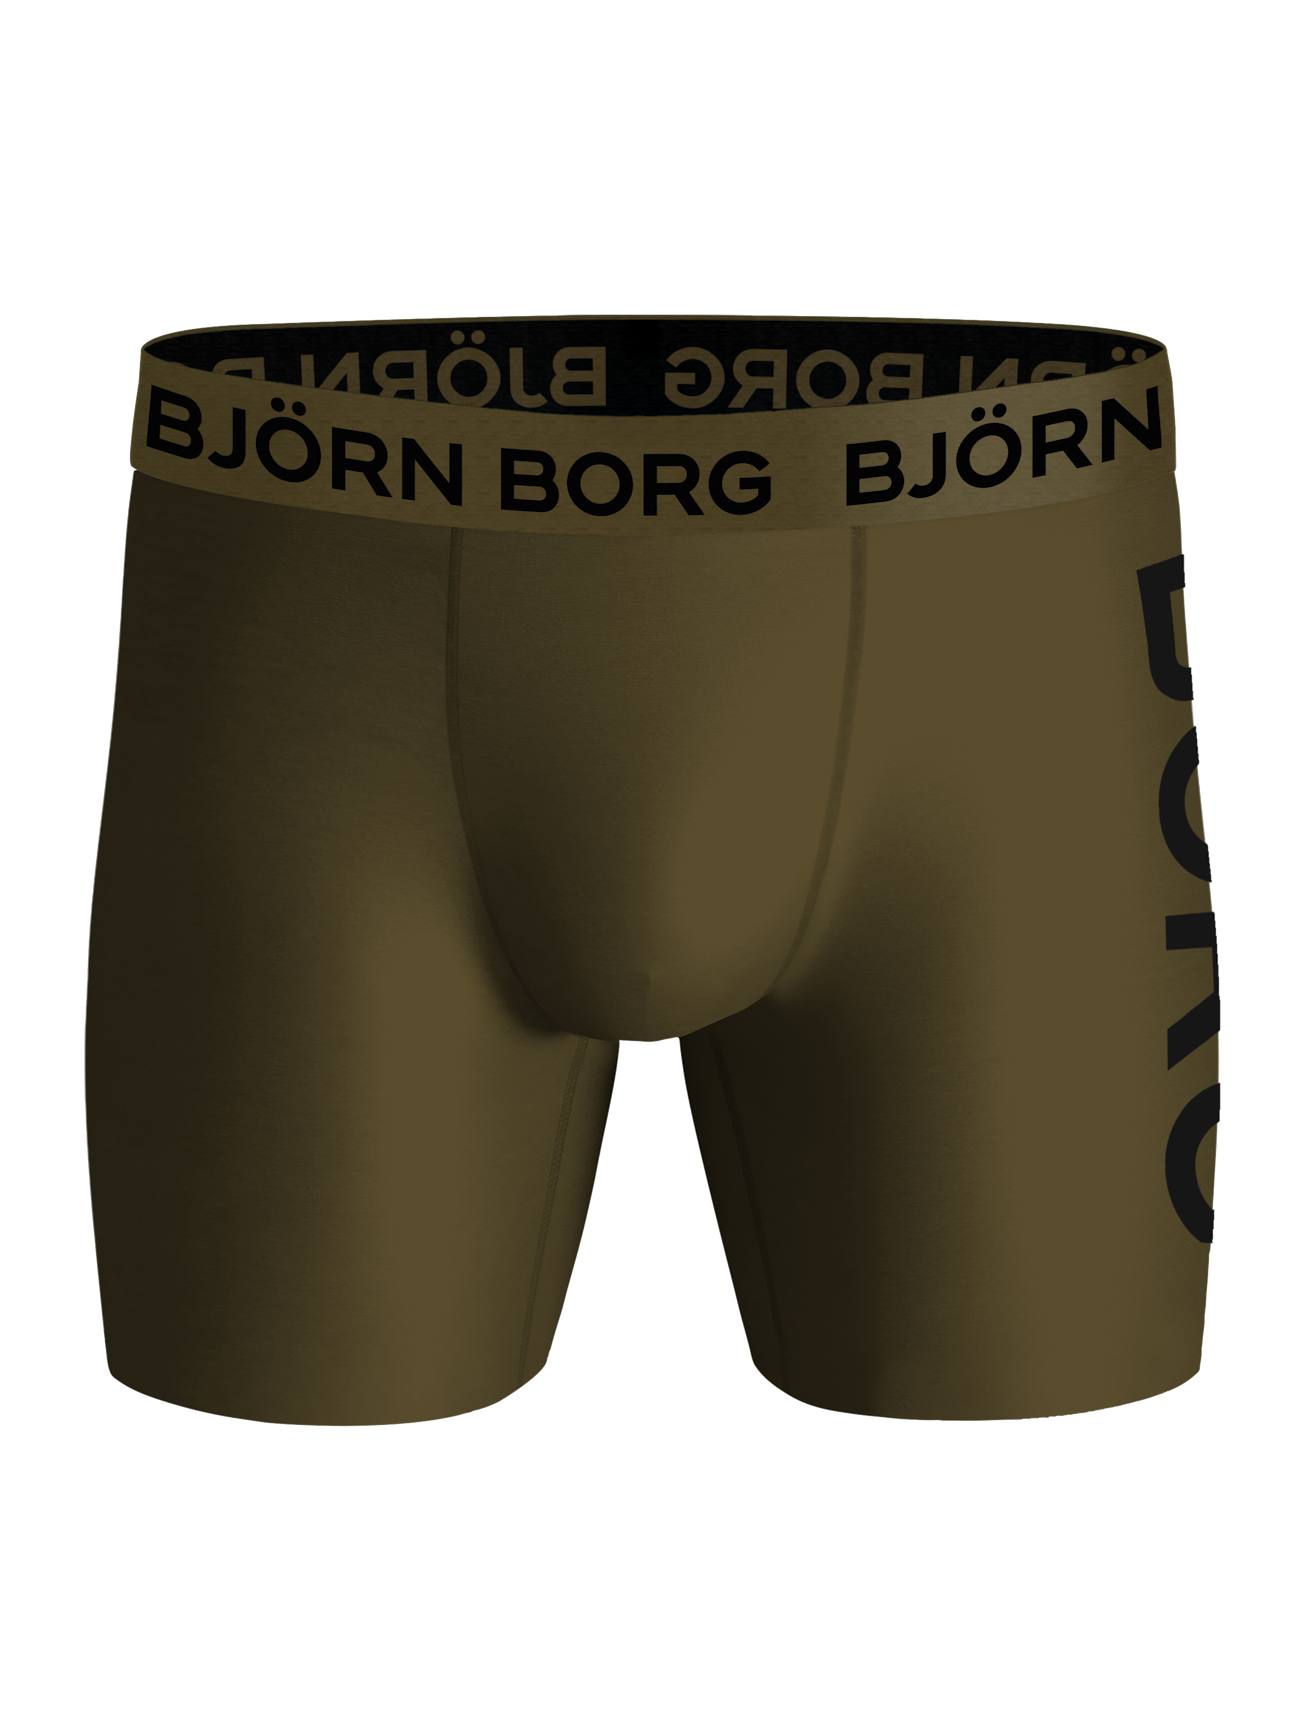 Björn Borg - Men's Boxer Shorts / Men's Underwear / Performance